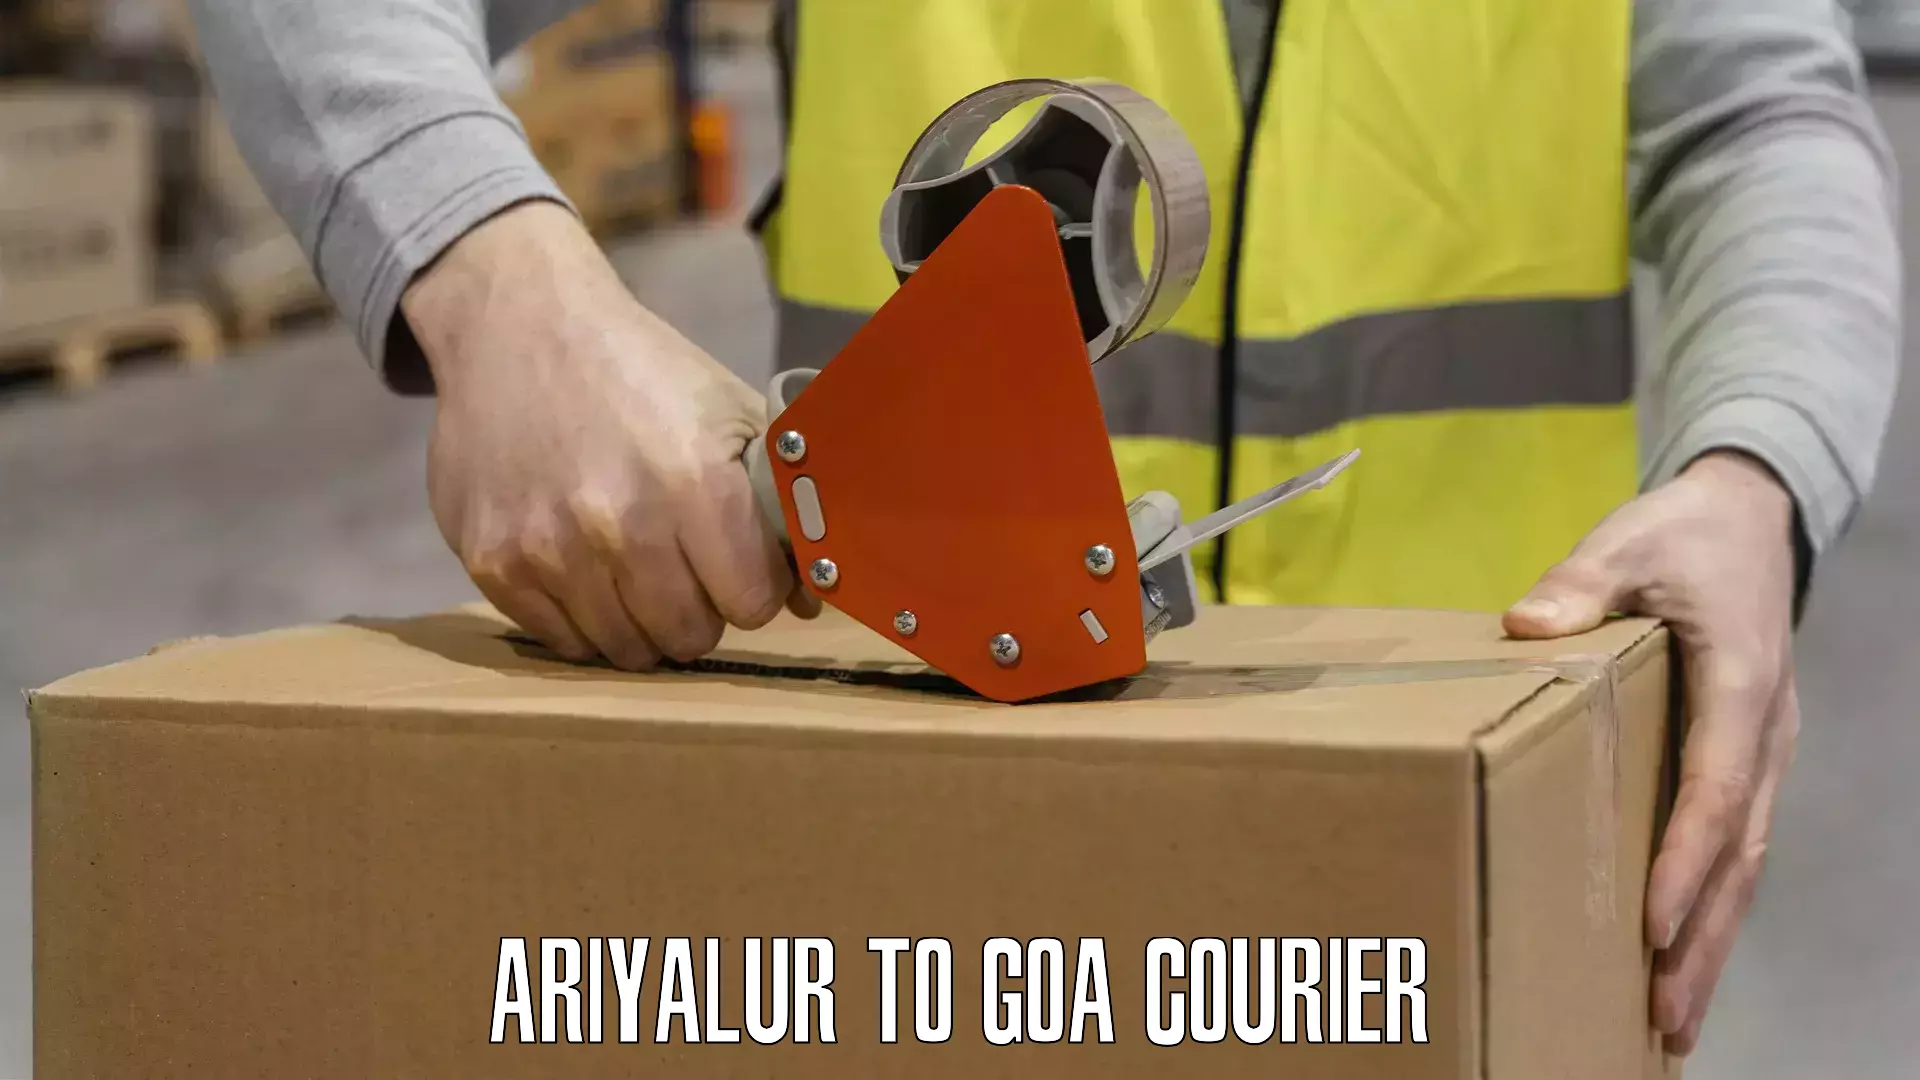 Digital courier platforms Ariyalur to Goa